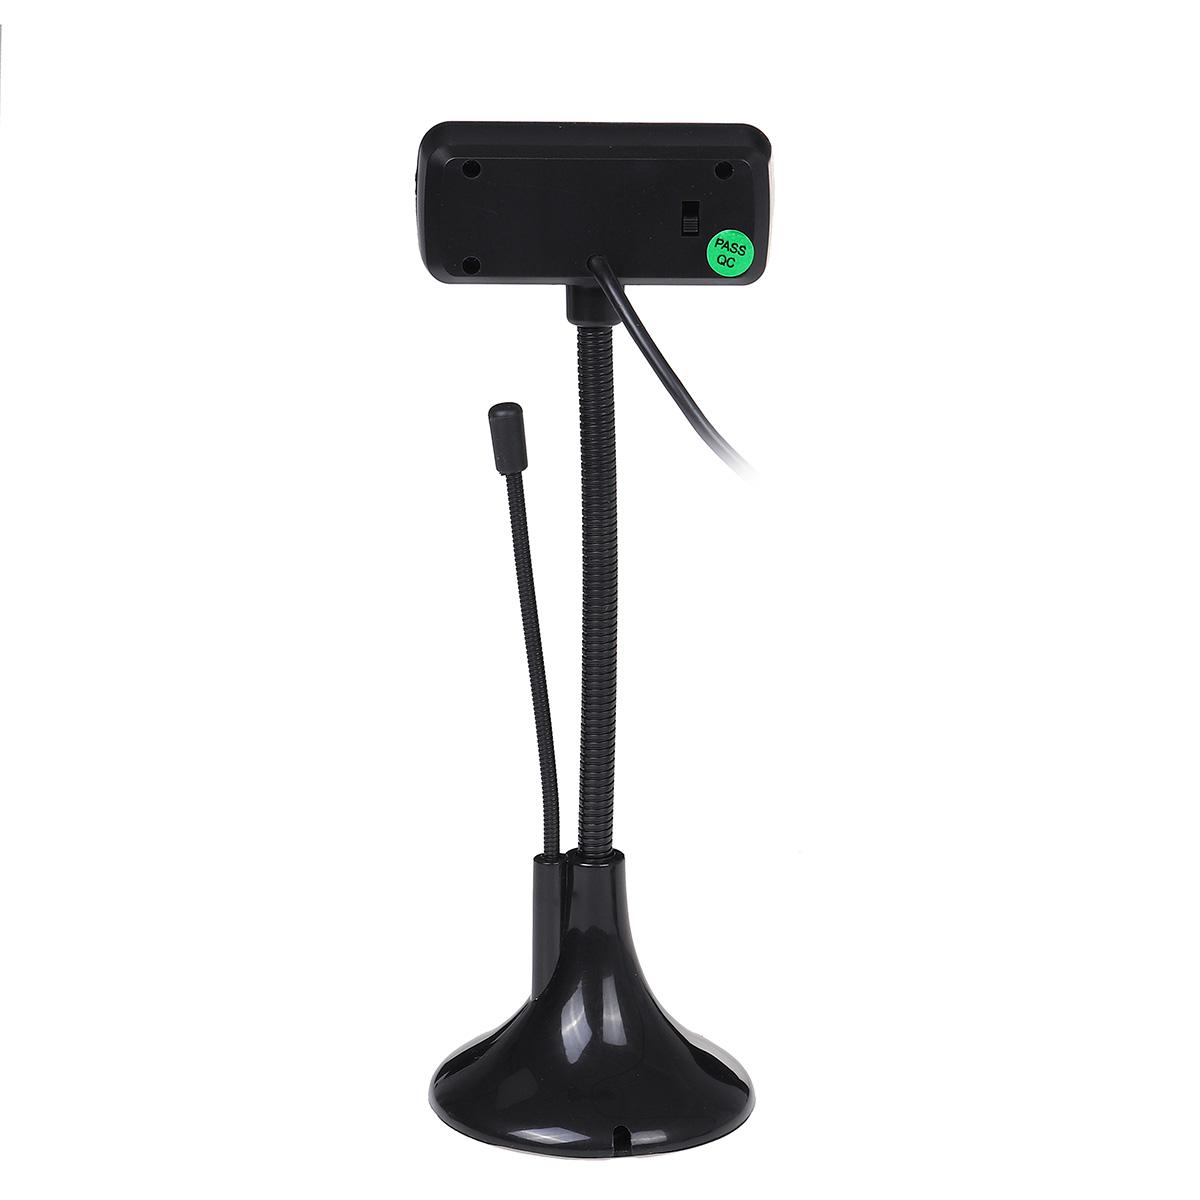 HD-Webcam-with-Microphone-Night-Vision-Camera-480P720P1080P-USB-Computer-Desktop-Web-Cam-Facecam-Adj-1797344-6